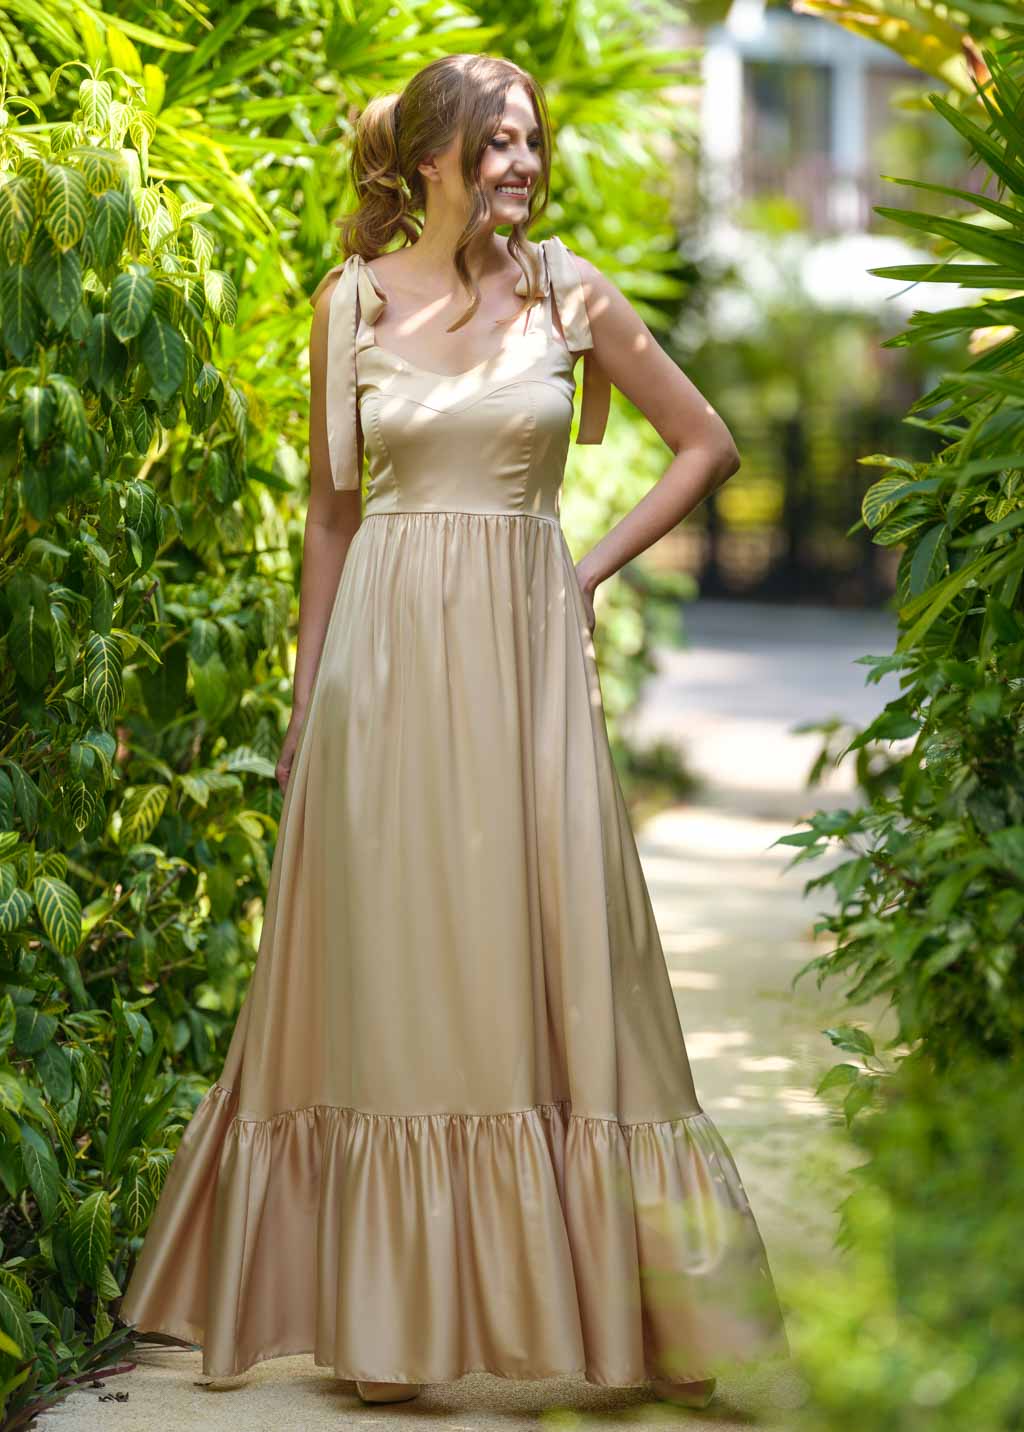 Champagne gold silk dress